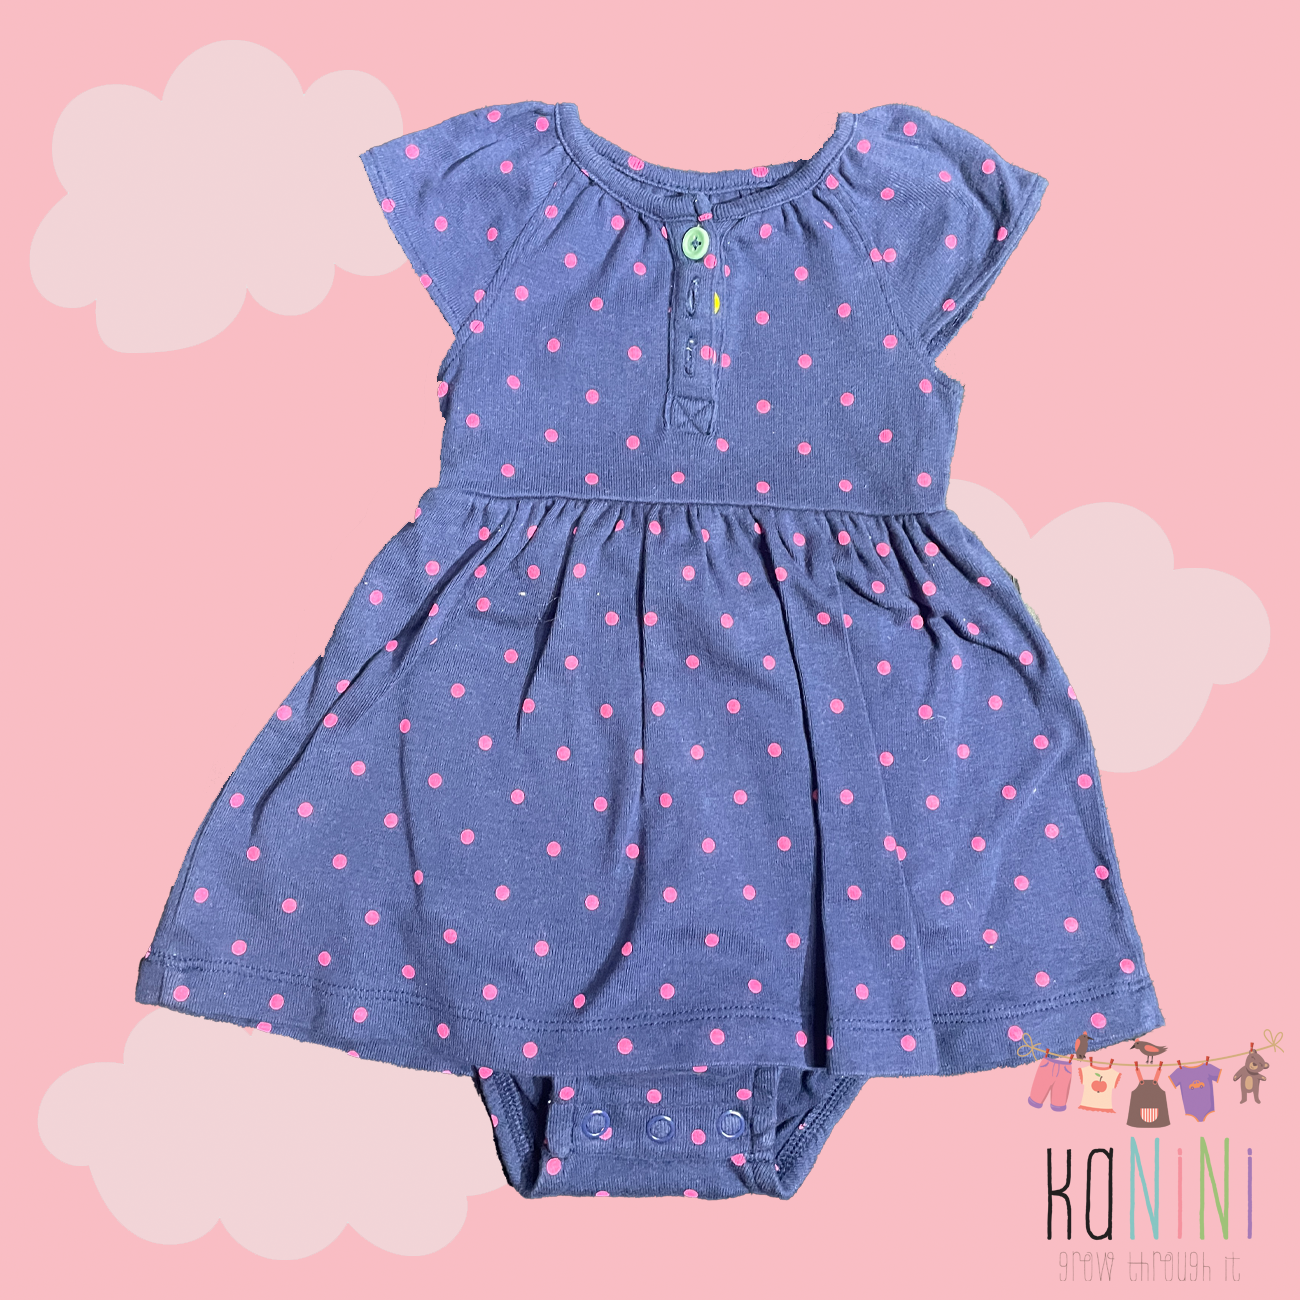 Featured image for “Carter's 9 Months Girls Polkadot Dress”